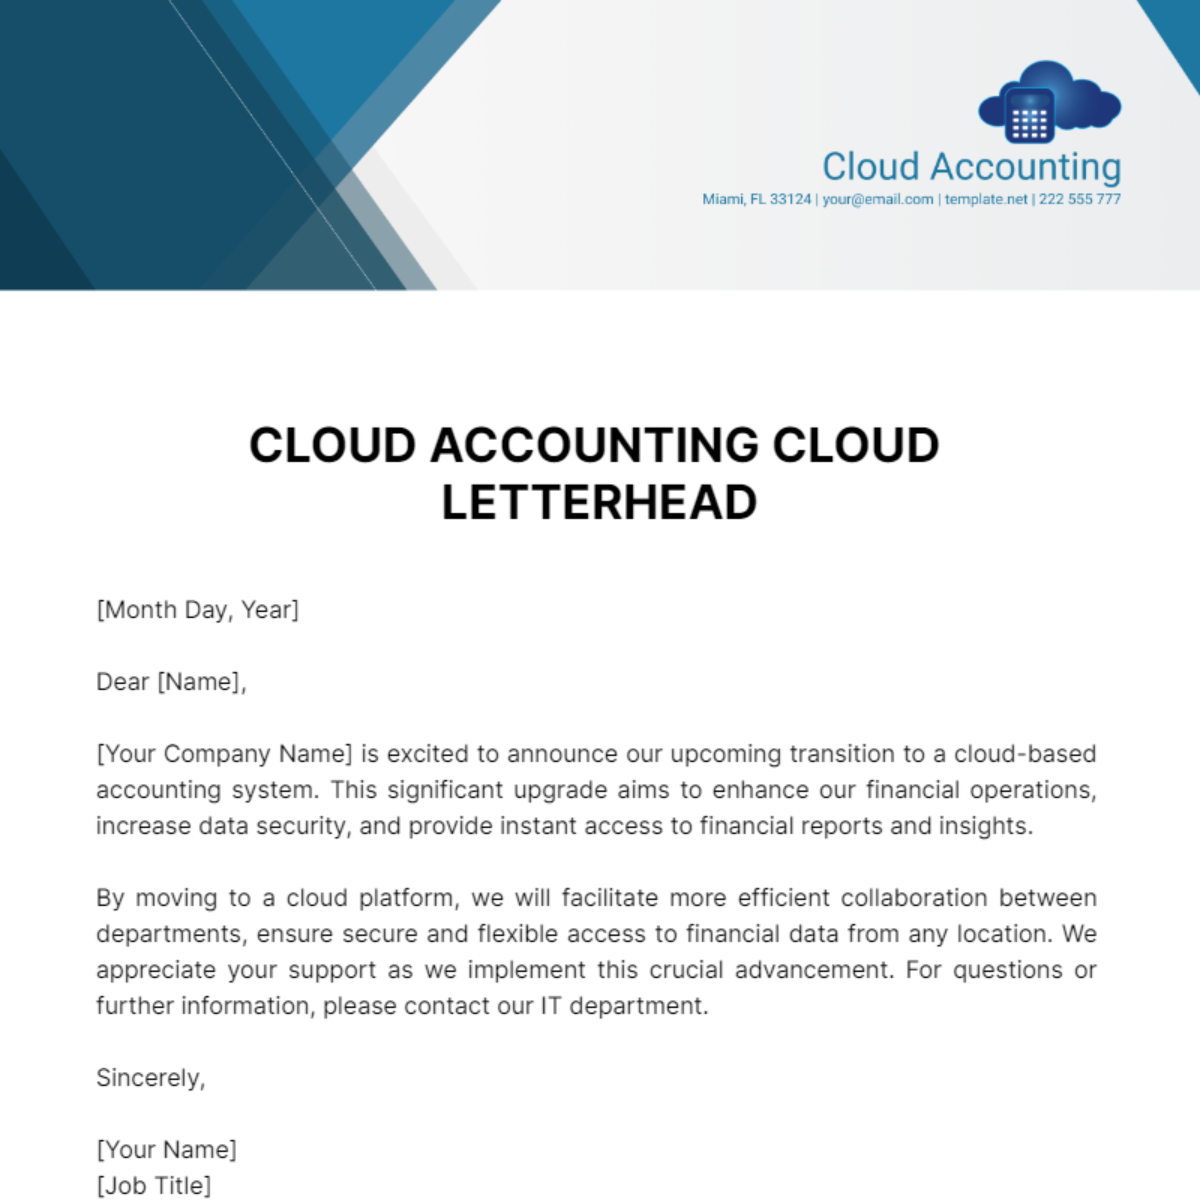 Free Cloud Accounting Cloud Letterhead Template